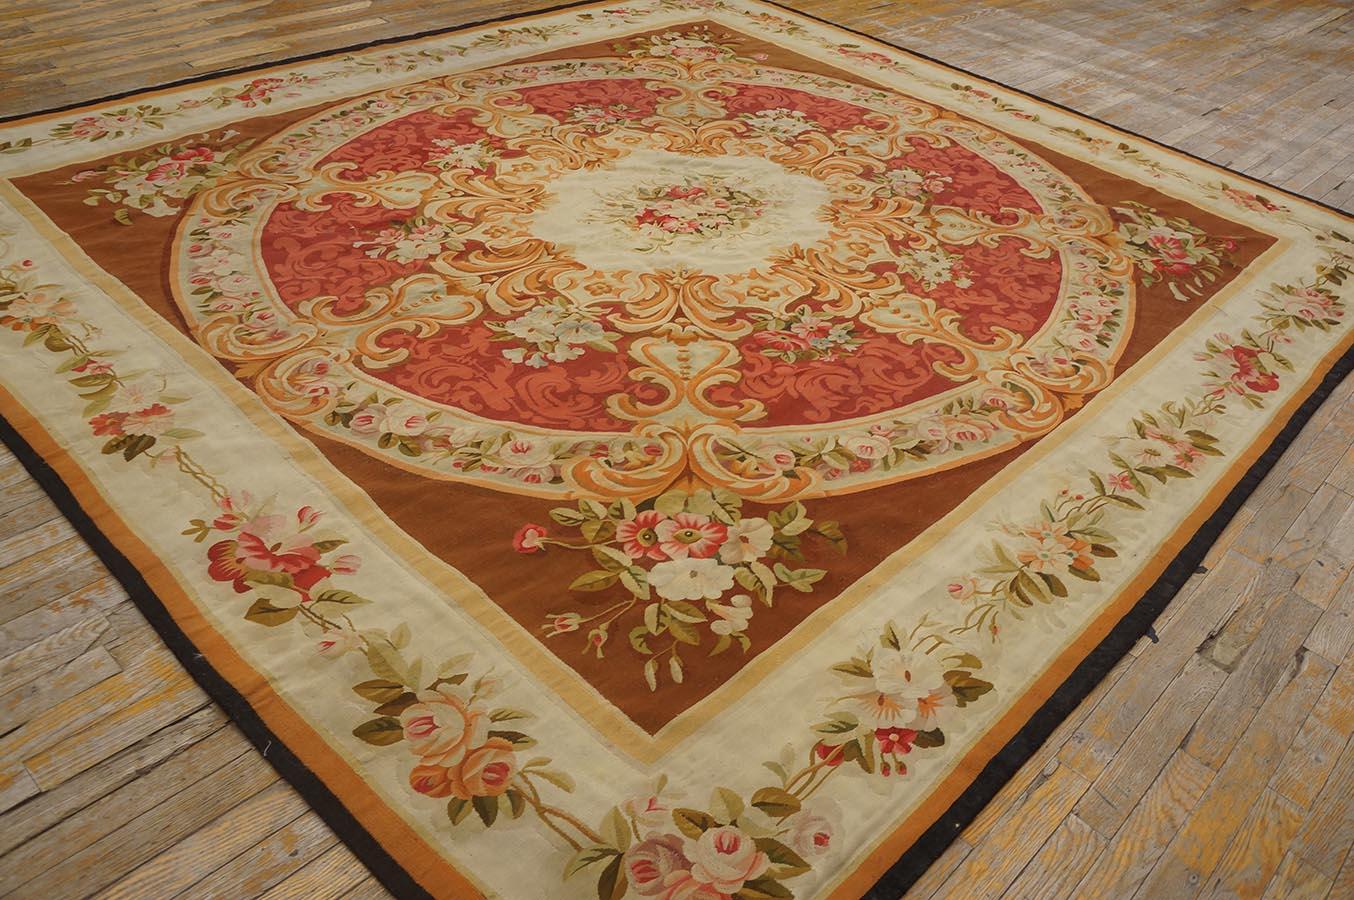 Hand-Woven French Aubusson Carpet Circa 1870s (9'2